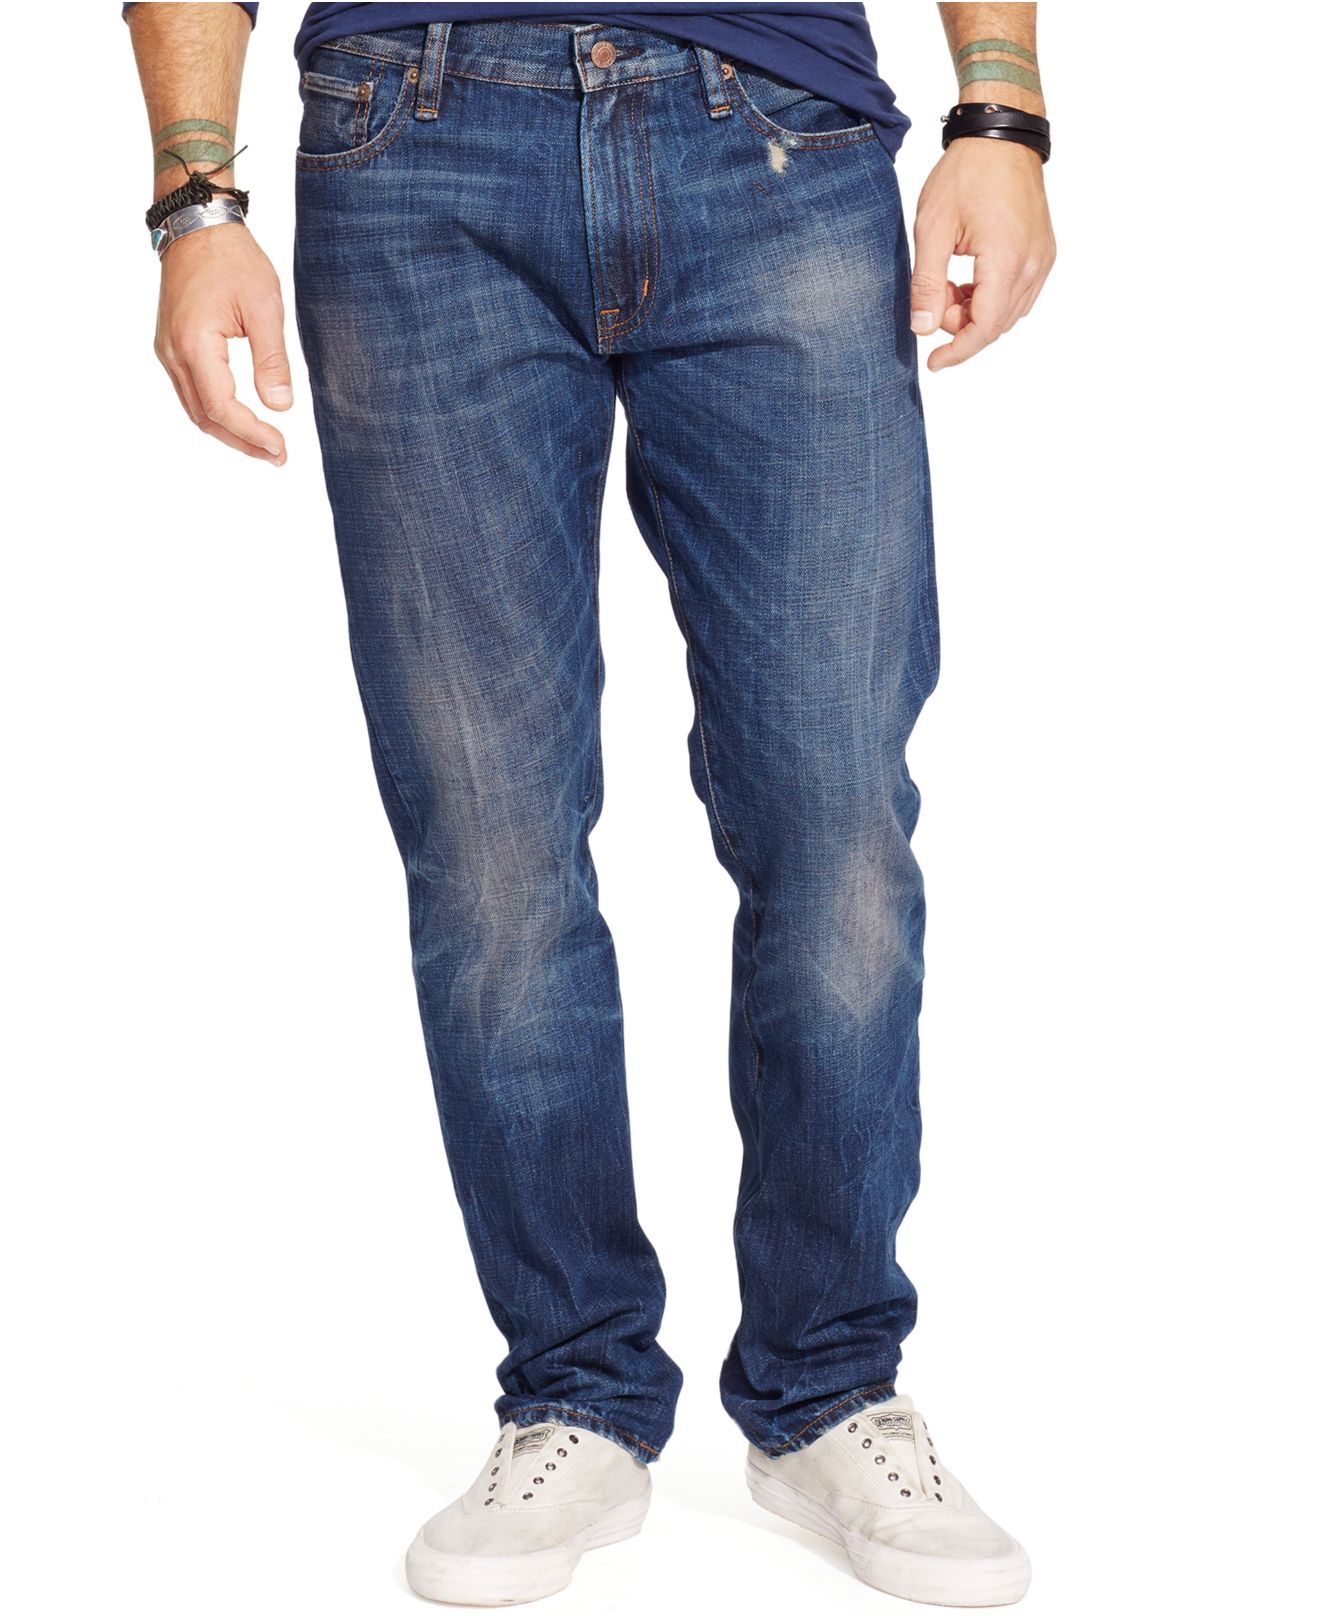 Lyst - Denim & Supply Ralph Lauren Men's Low-rise Straight-fit Jeans in ...